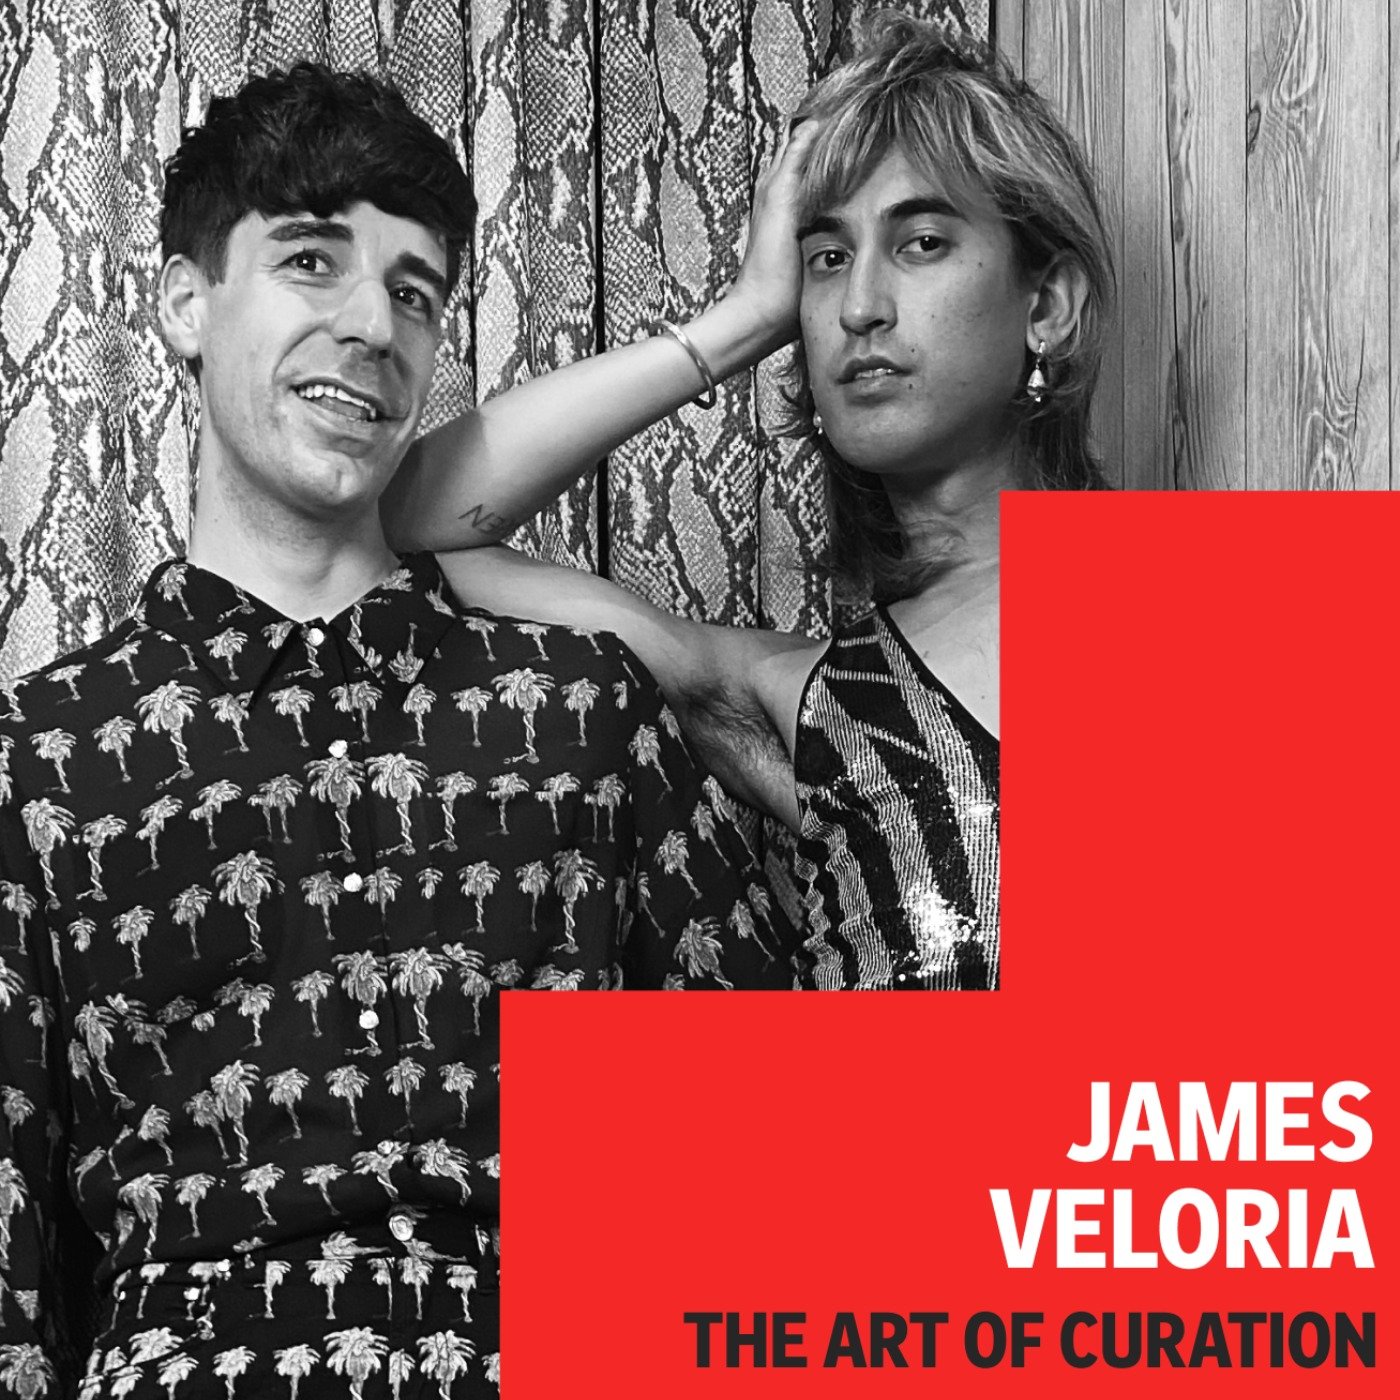 Vintage clothing that creates community 👗 James Veloria